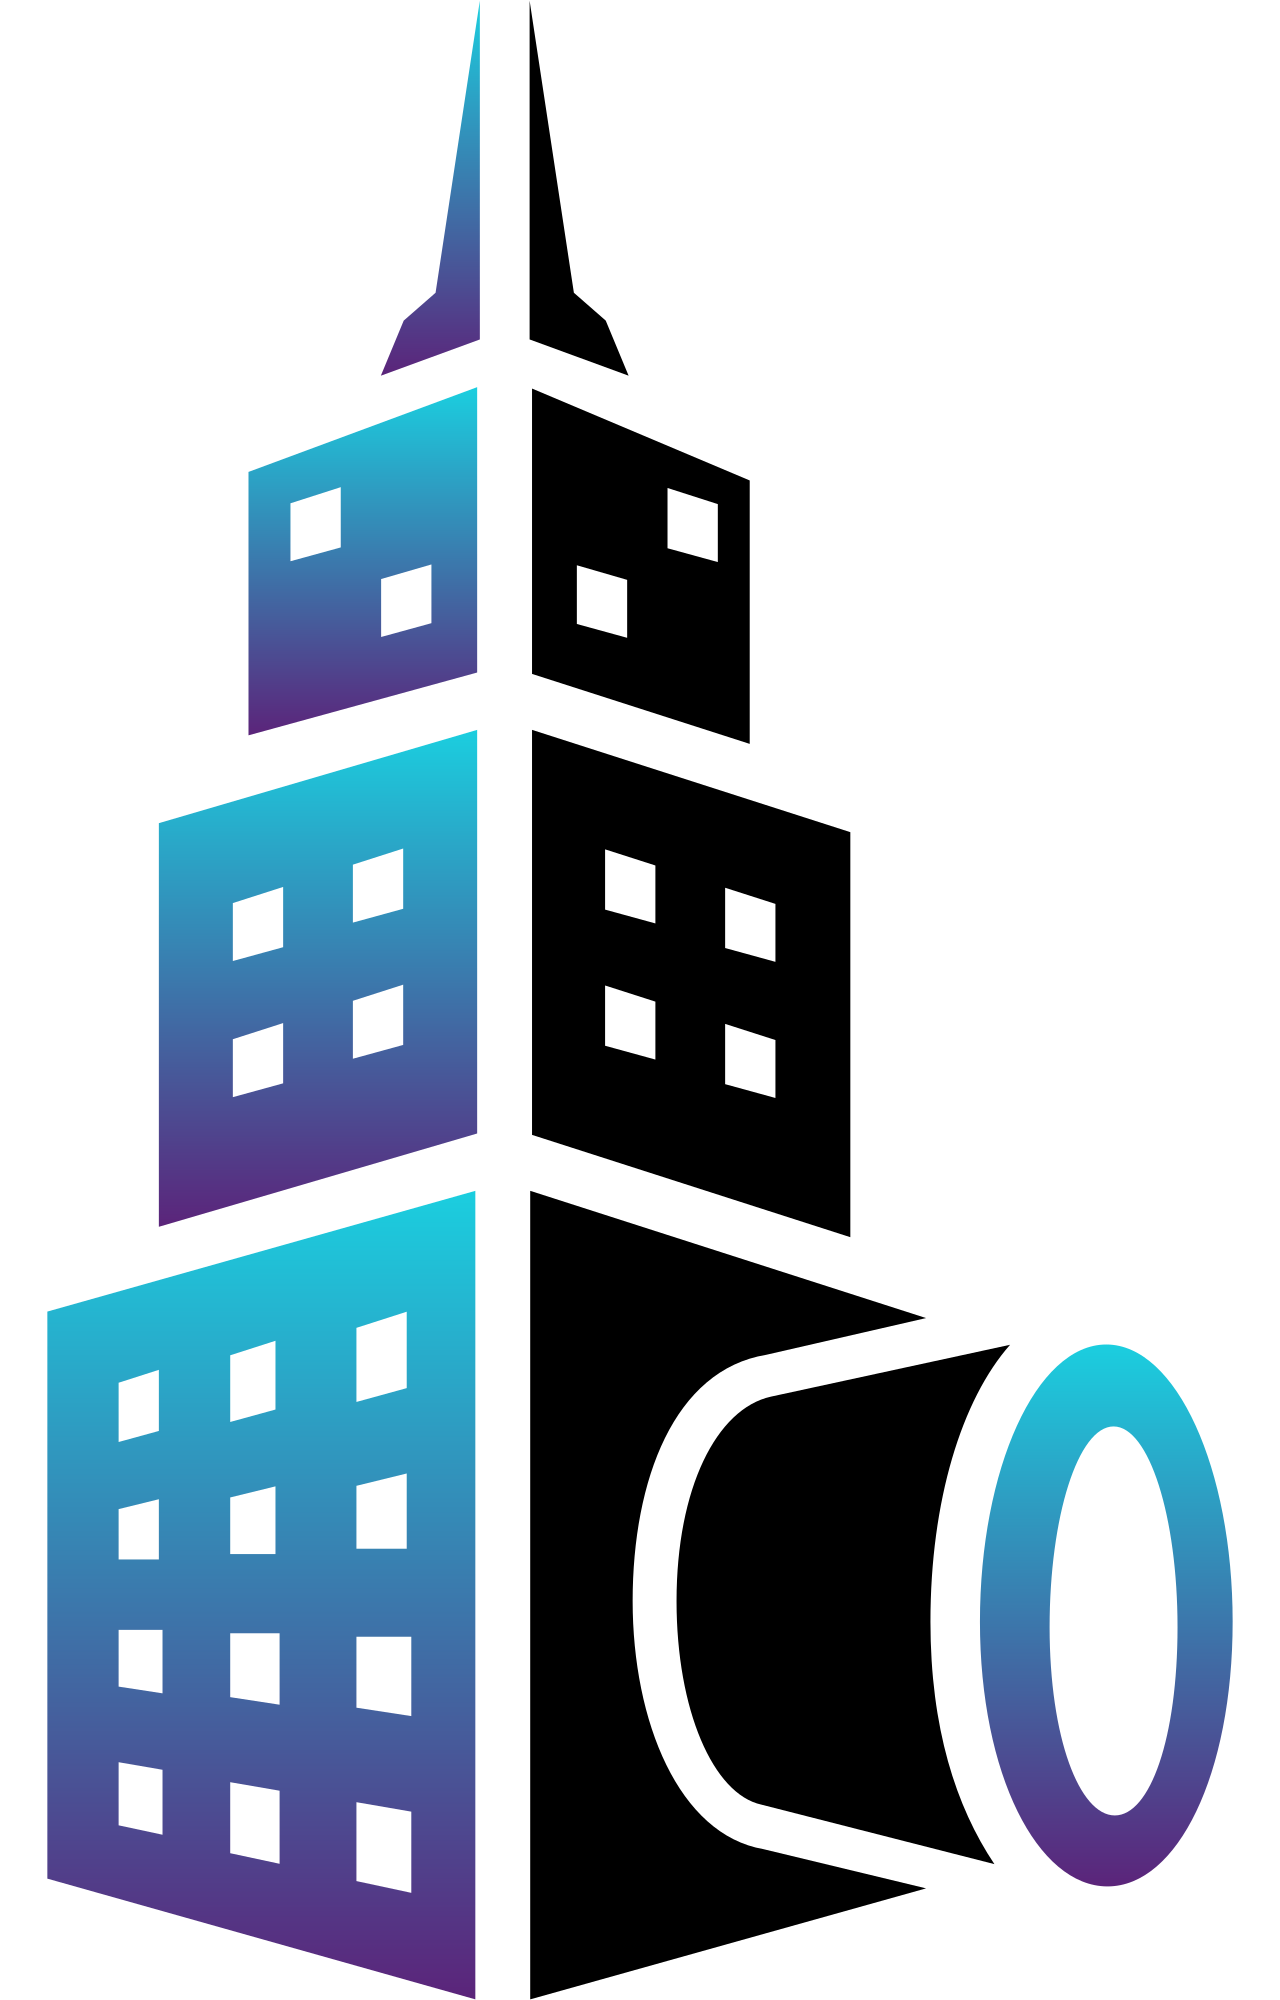 Urban lens's logo